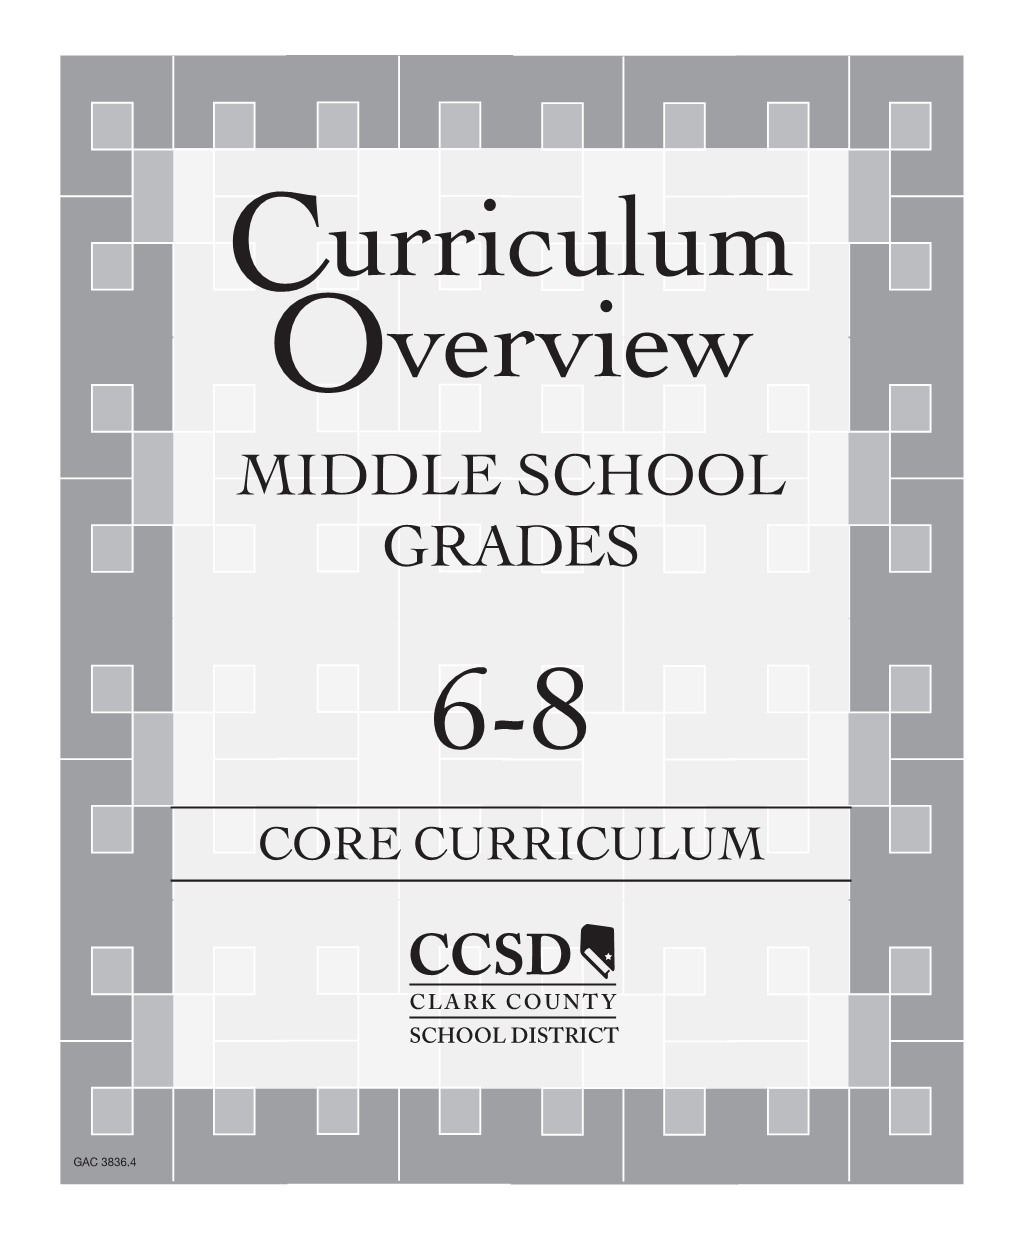 Curriculum Overview MIDDLE SCHOOL GRADES 6-8 CORE CURRICULUM